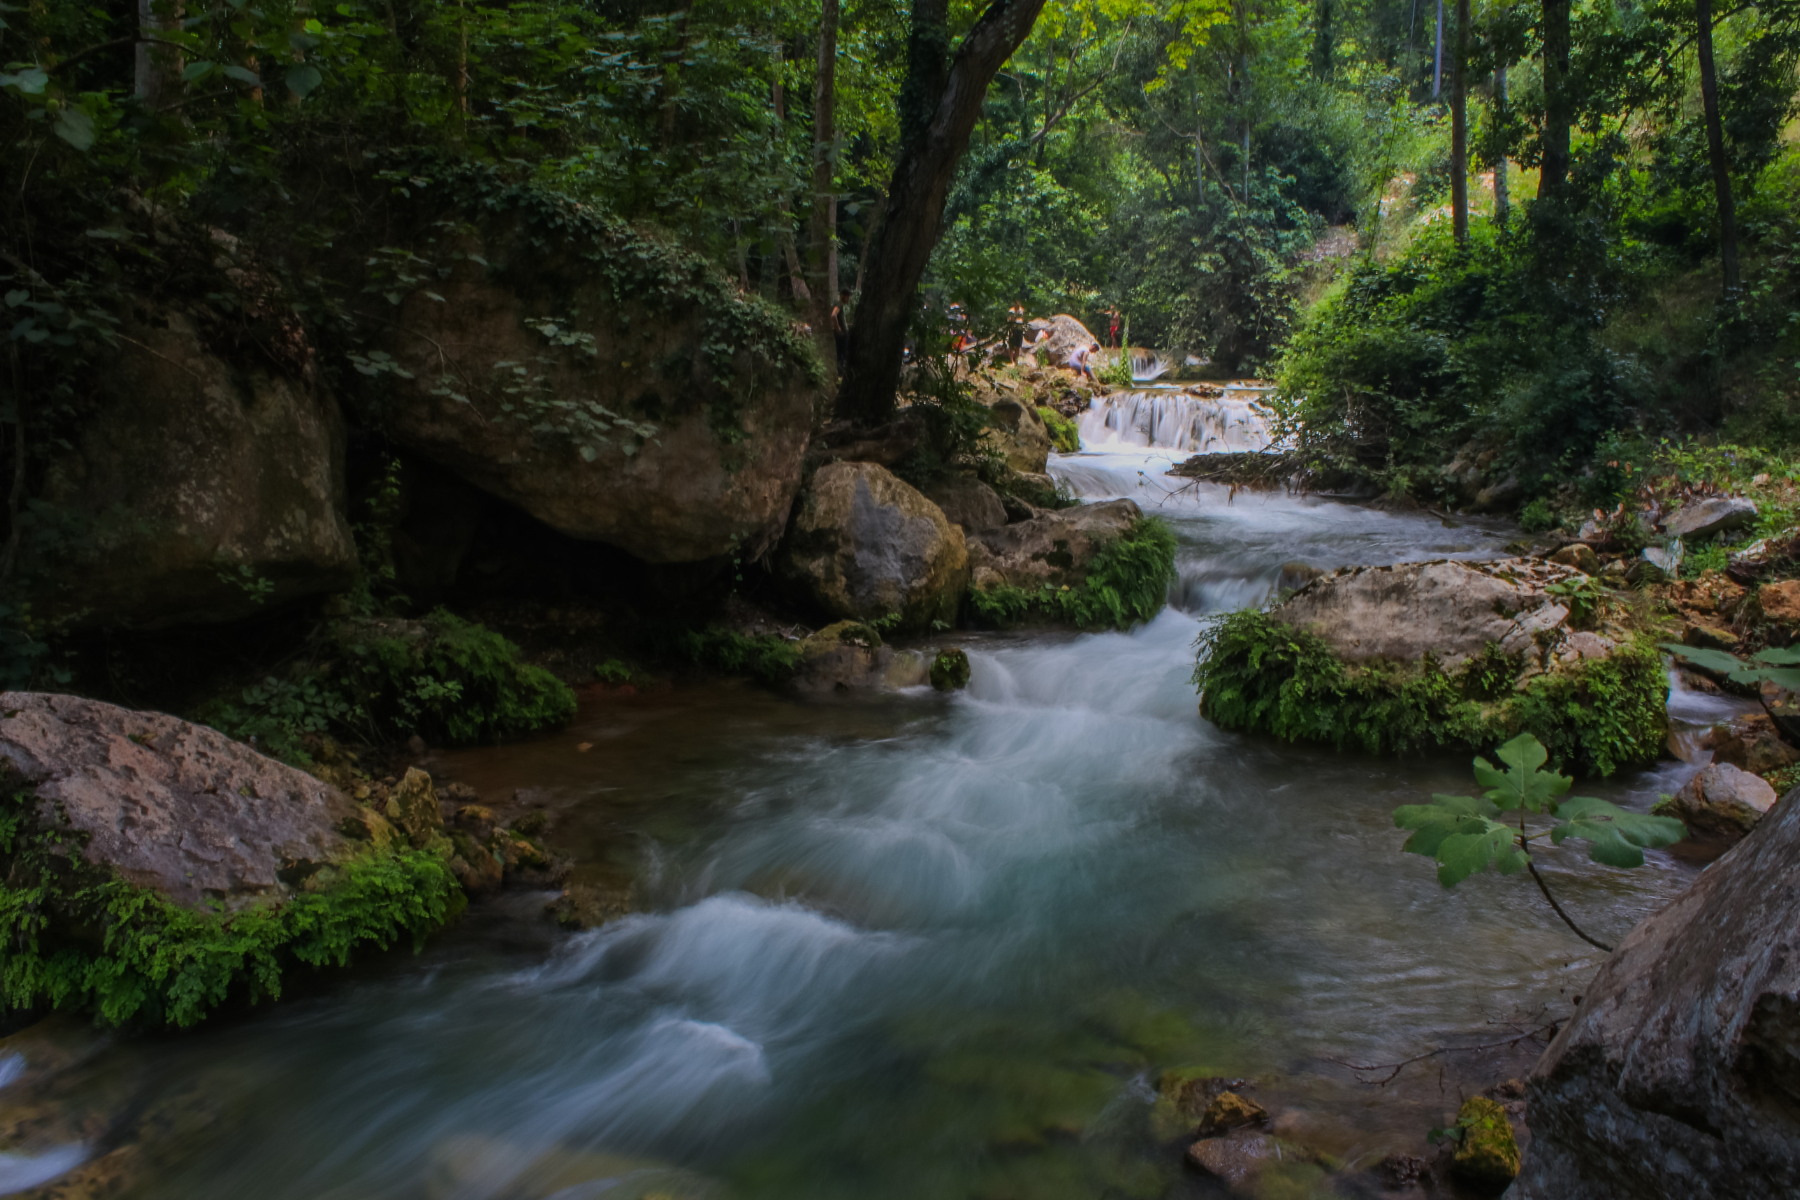 Stream running through forest slow exposure